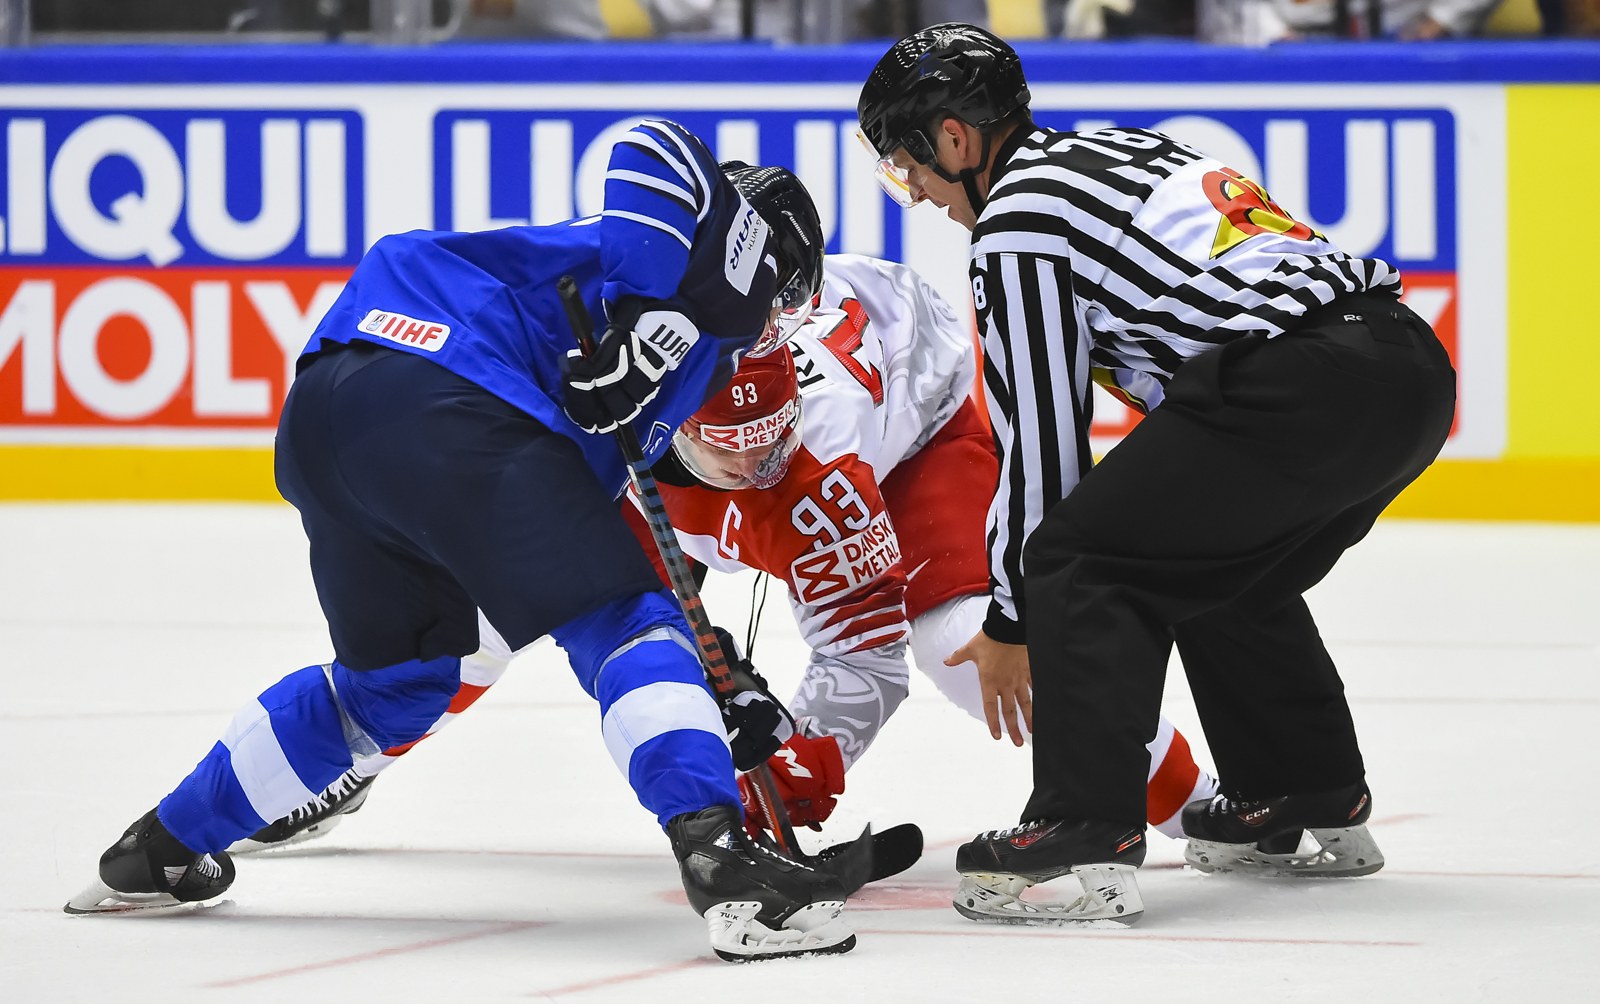 IIHF - Denmark stuns Finland